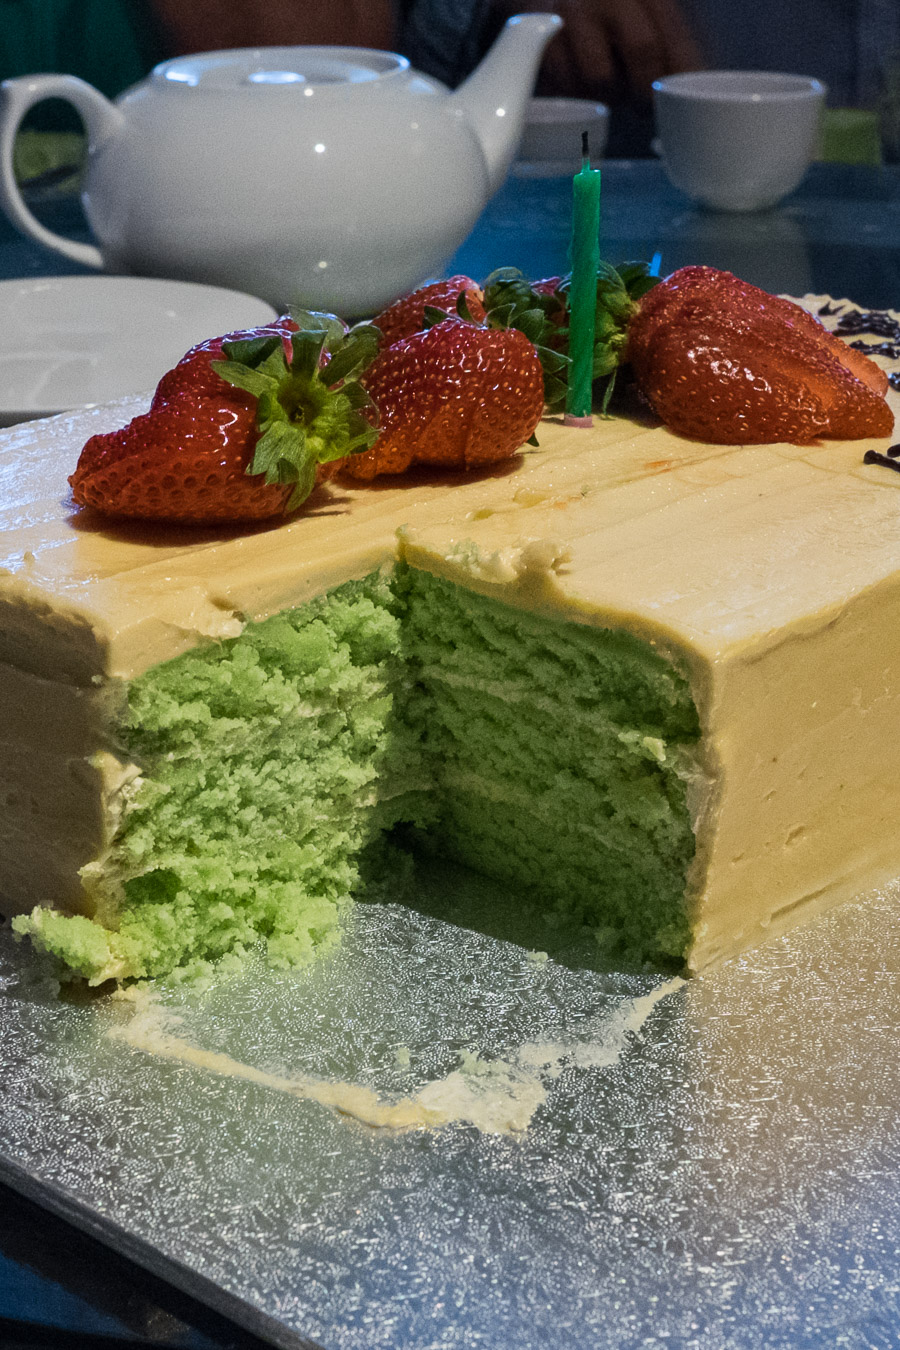 Love the green cake!